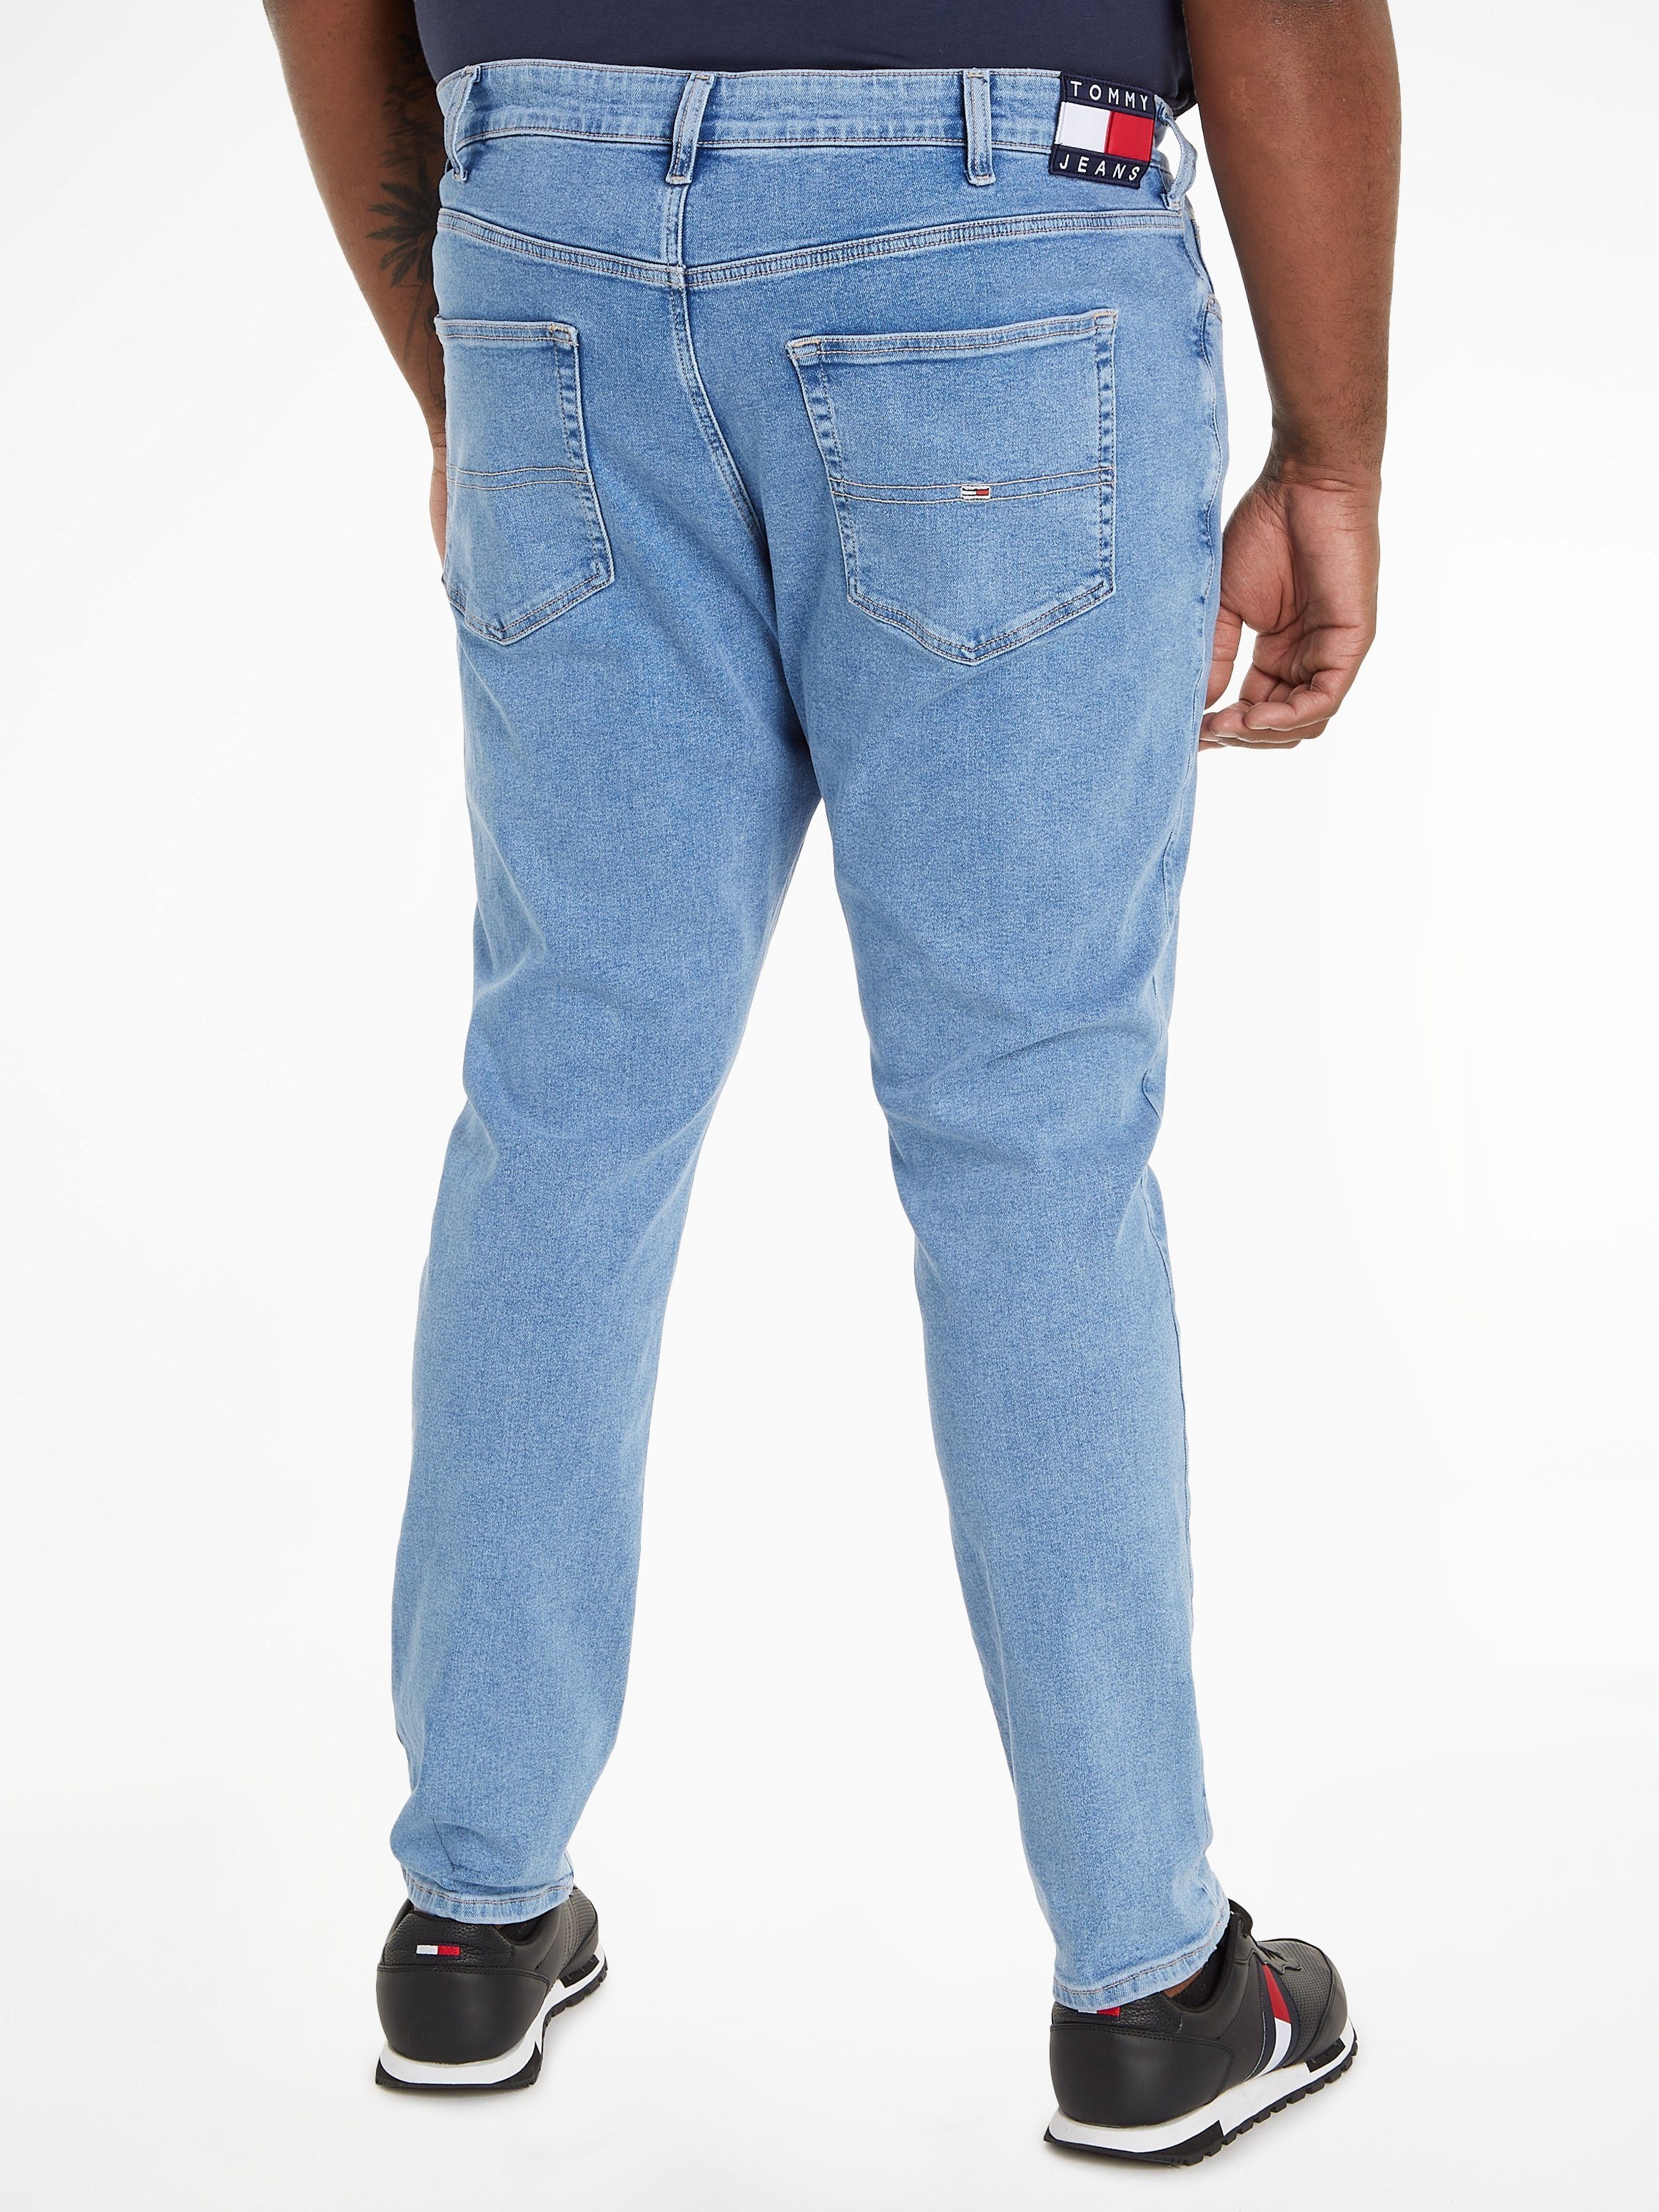 Plus Stretch-Jeans Tommy CG4239 SCANTON SLIM PLUS Jeans